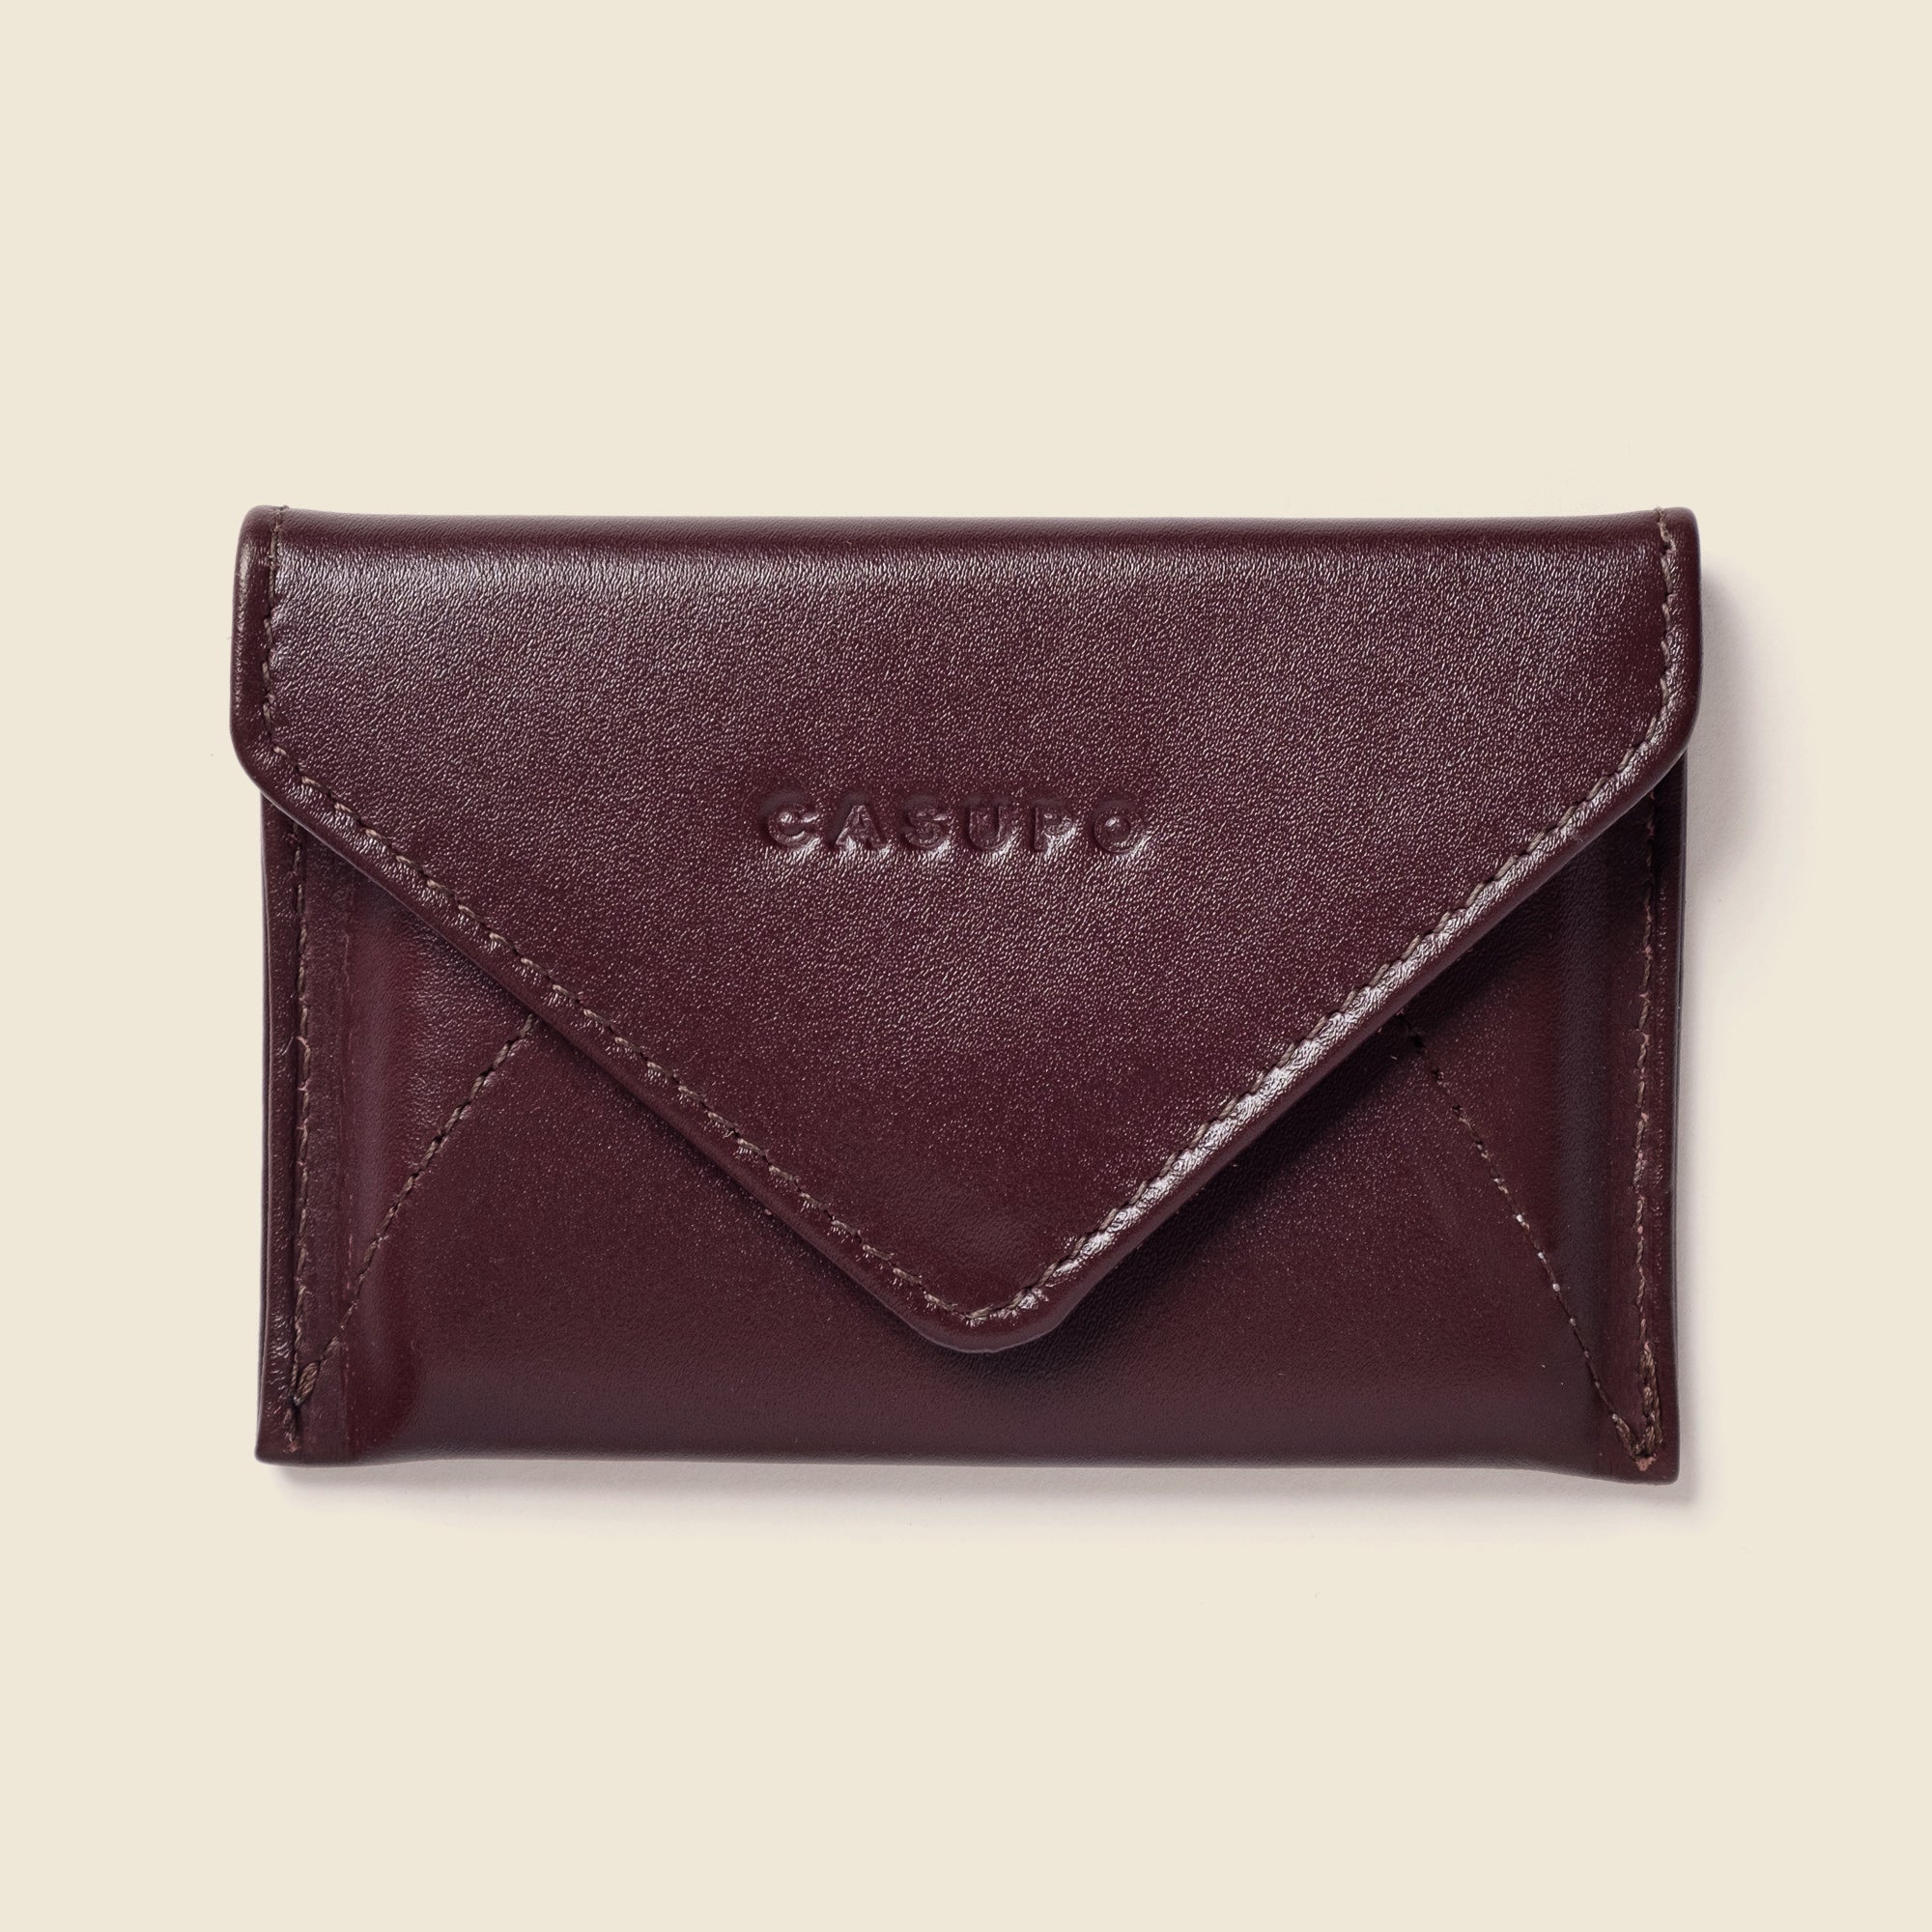 Wine leather wallet for women